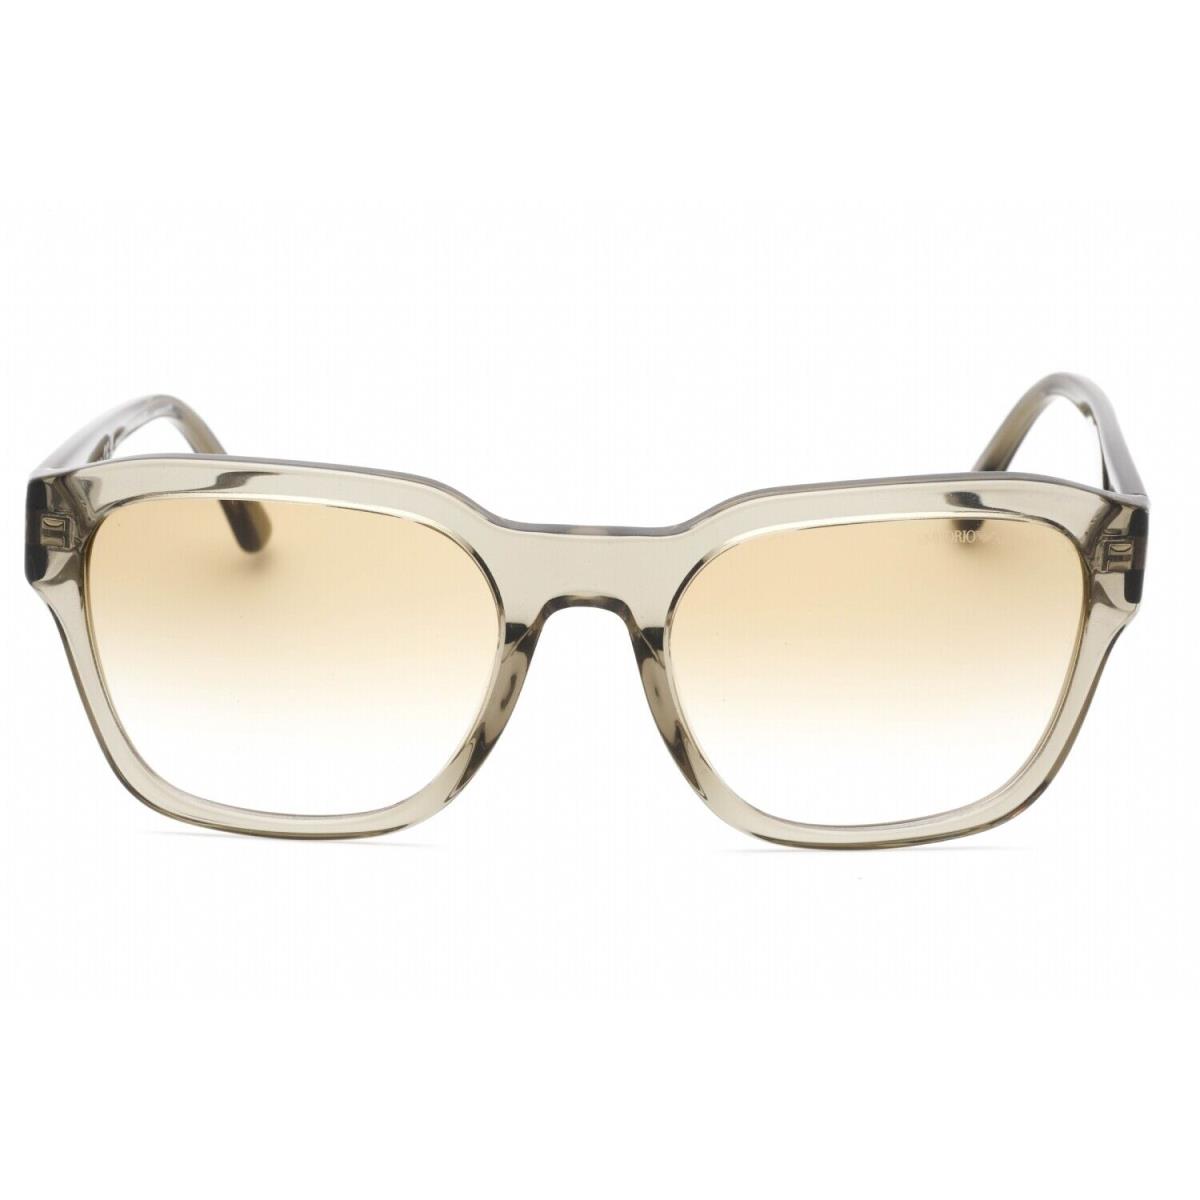 Emporio Armani EA4175 588413 Sunglasses Transparent Green Frame Gradient Brown